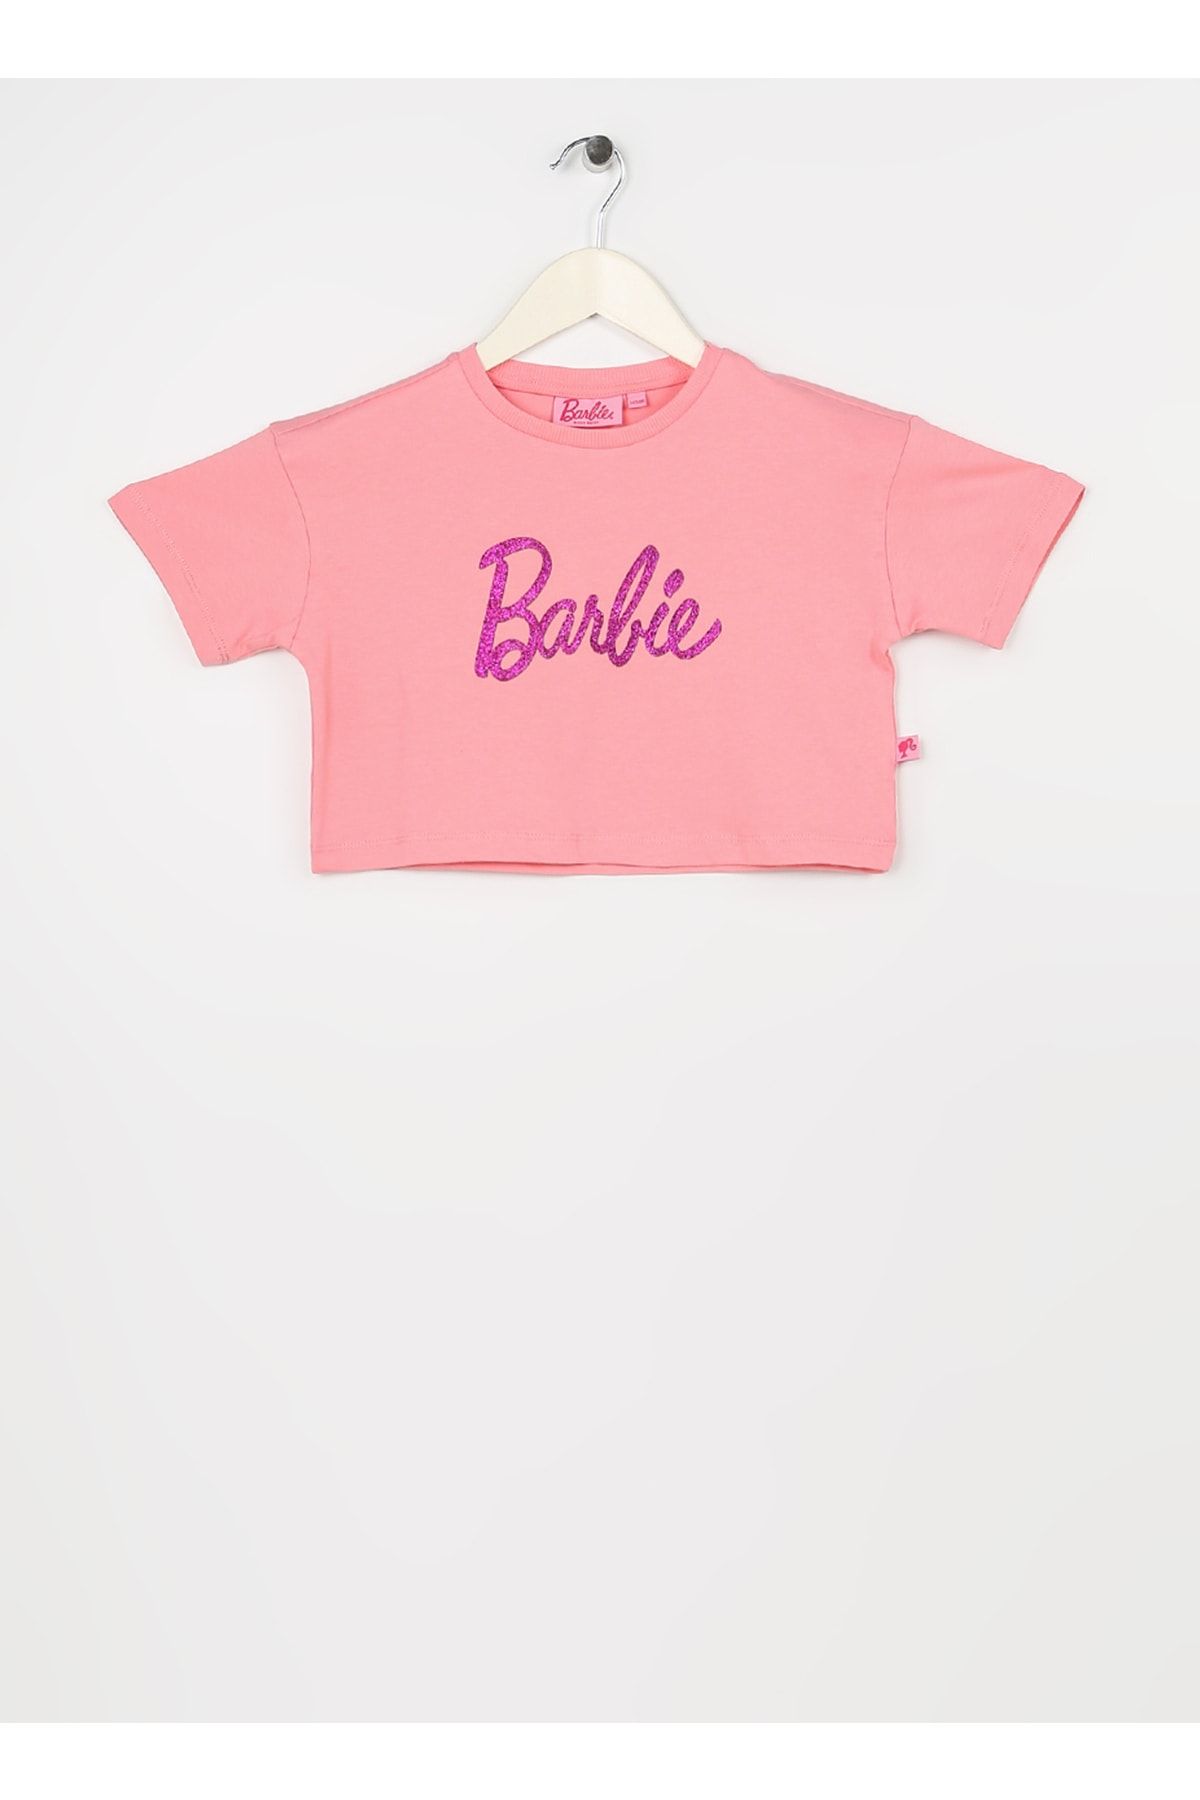 Barbie Baskılı Pembe Kız Çocuk T-shirt 23ssb-16